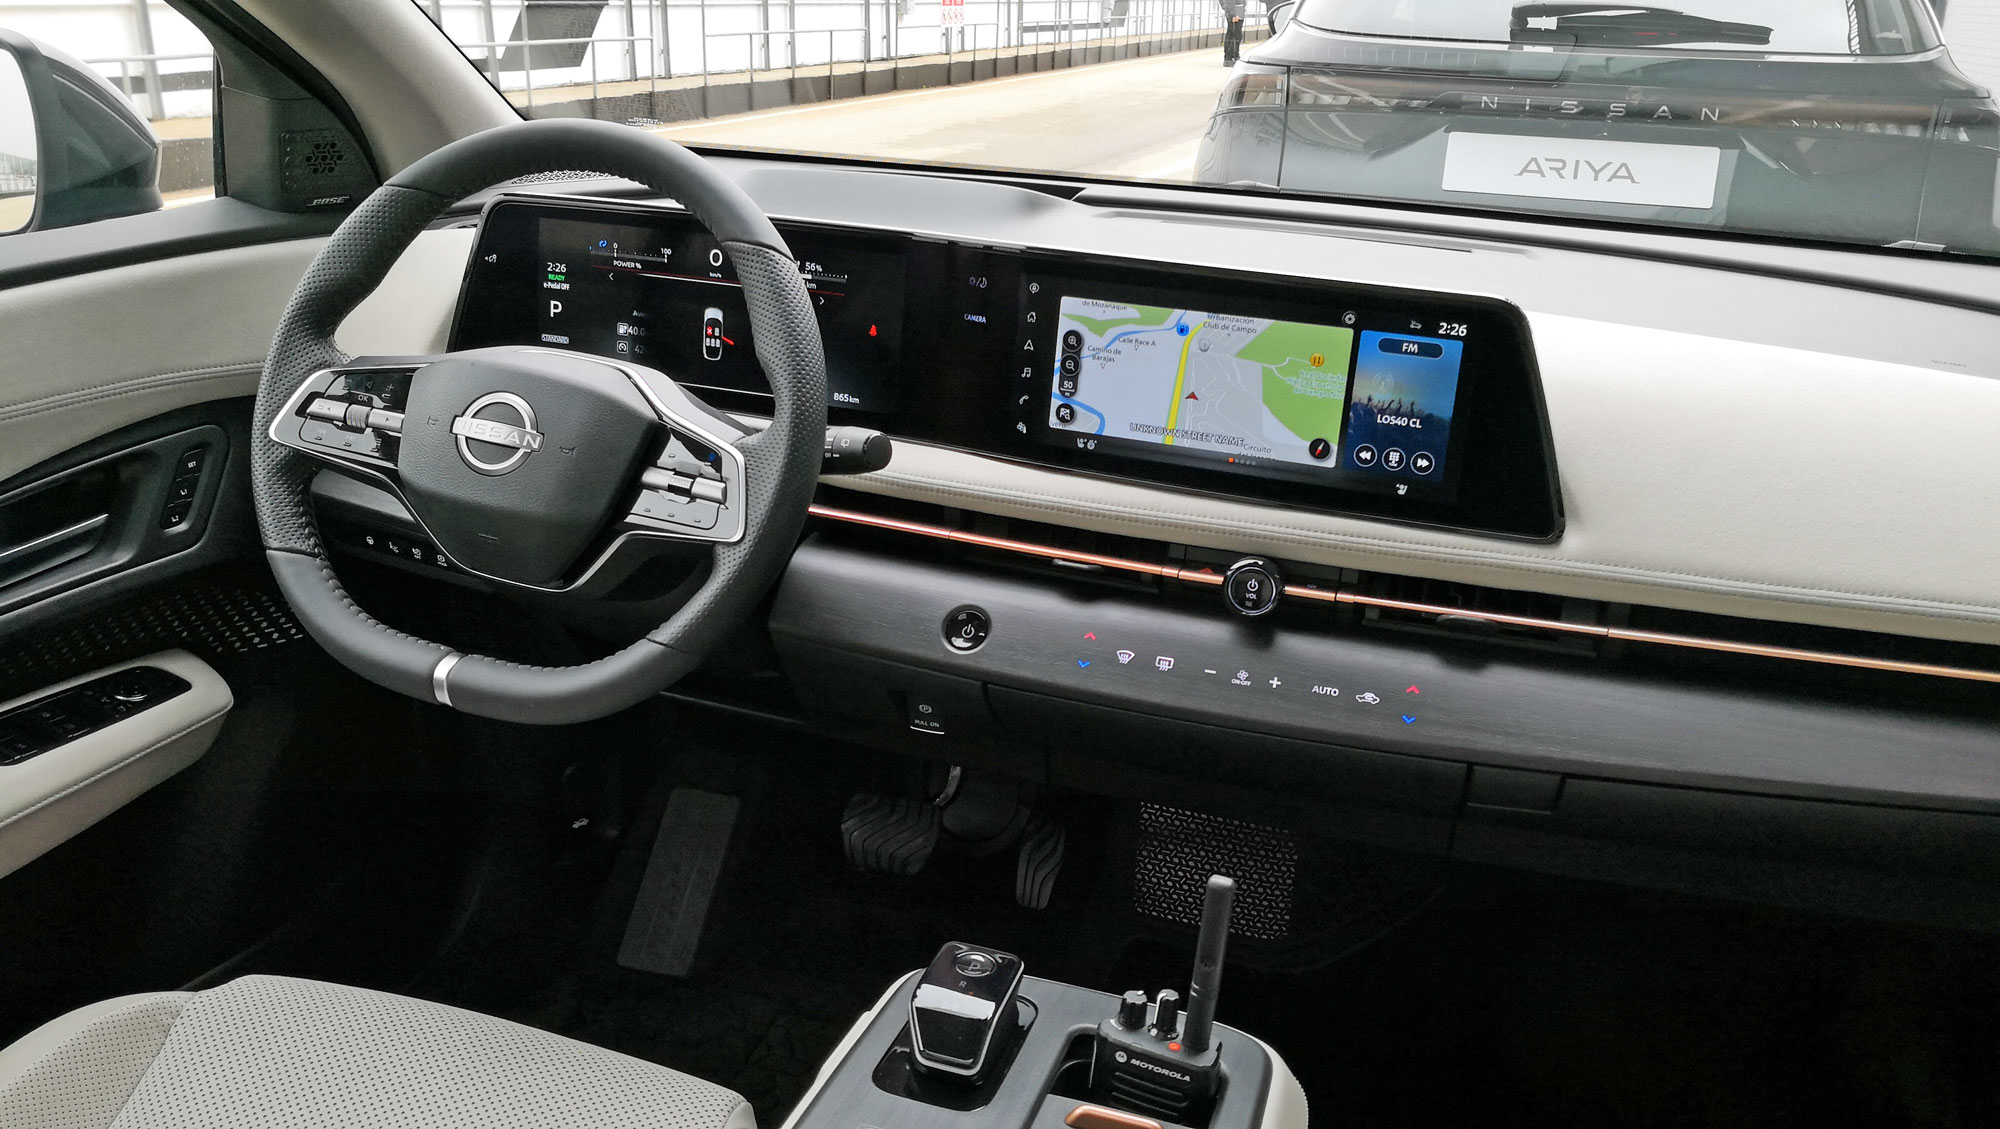 The dash inside the Ariya SUV electric vehicle